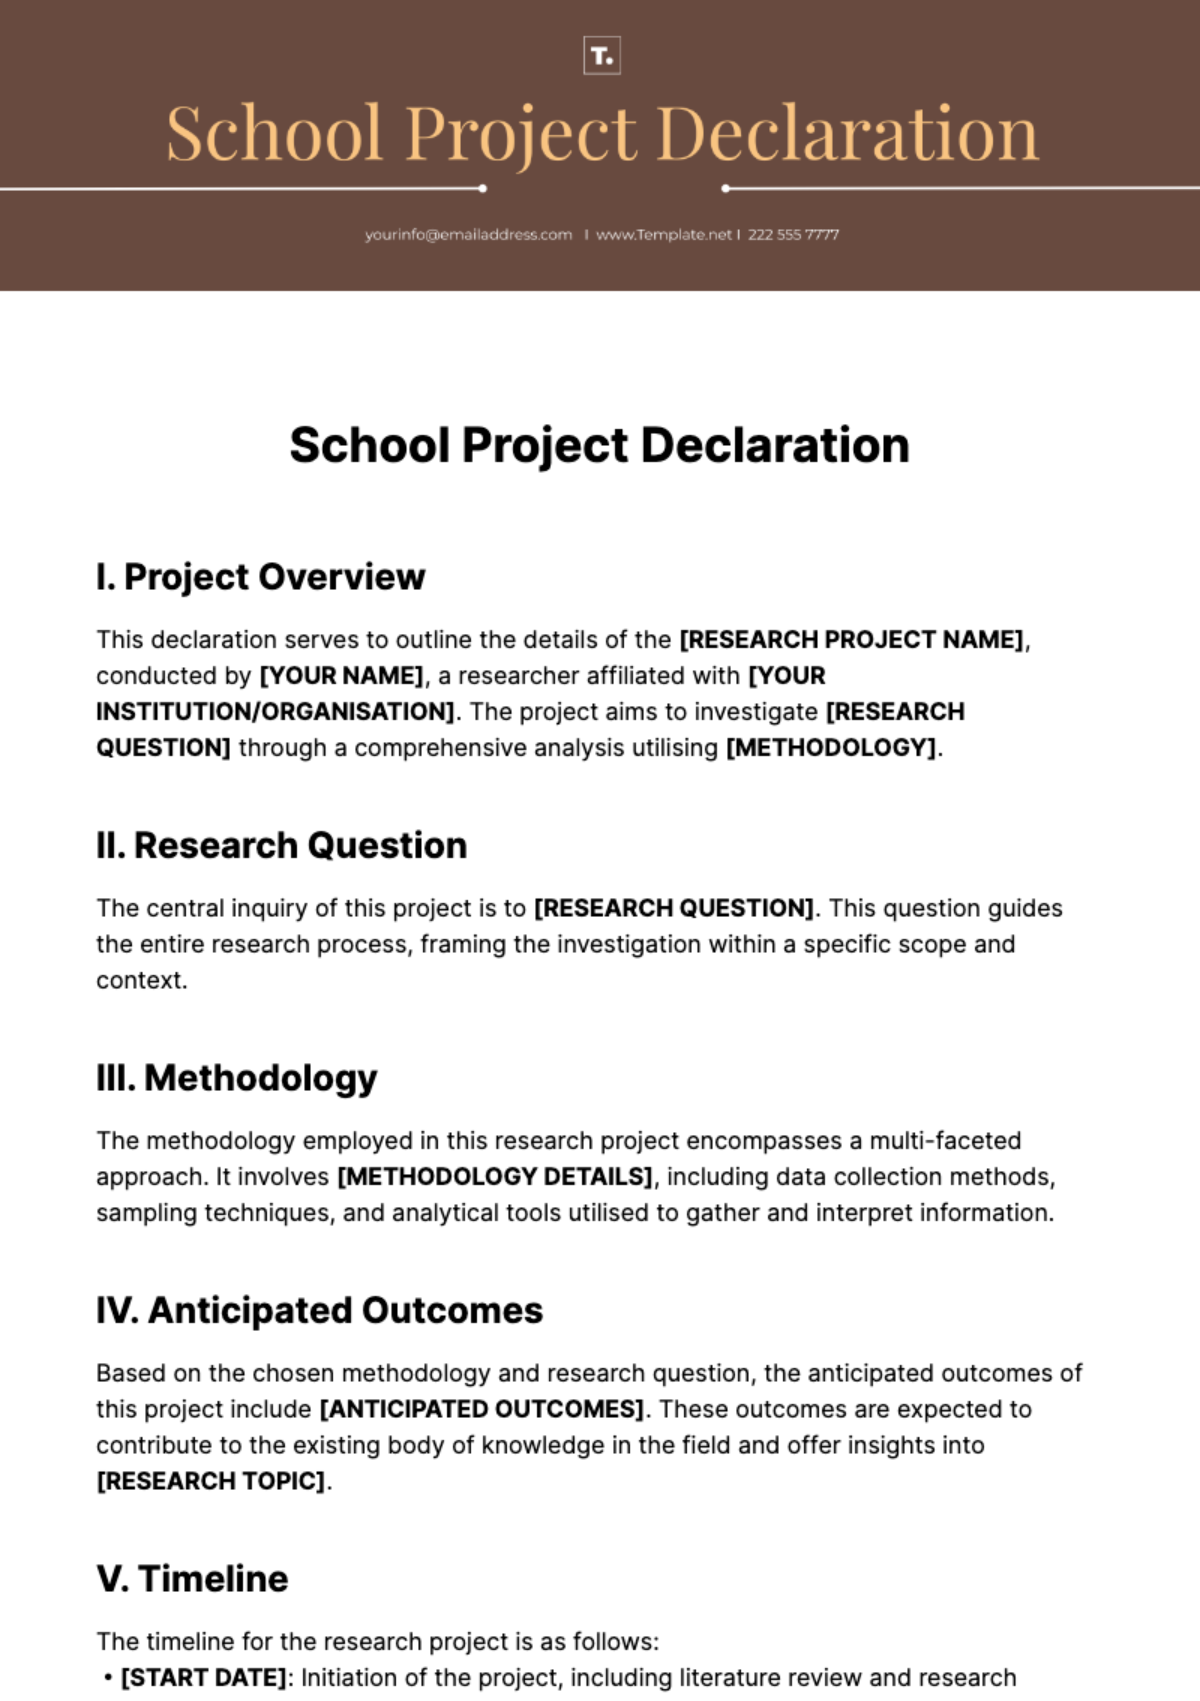 Free School Project Declaration Template